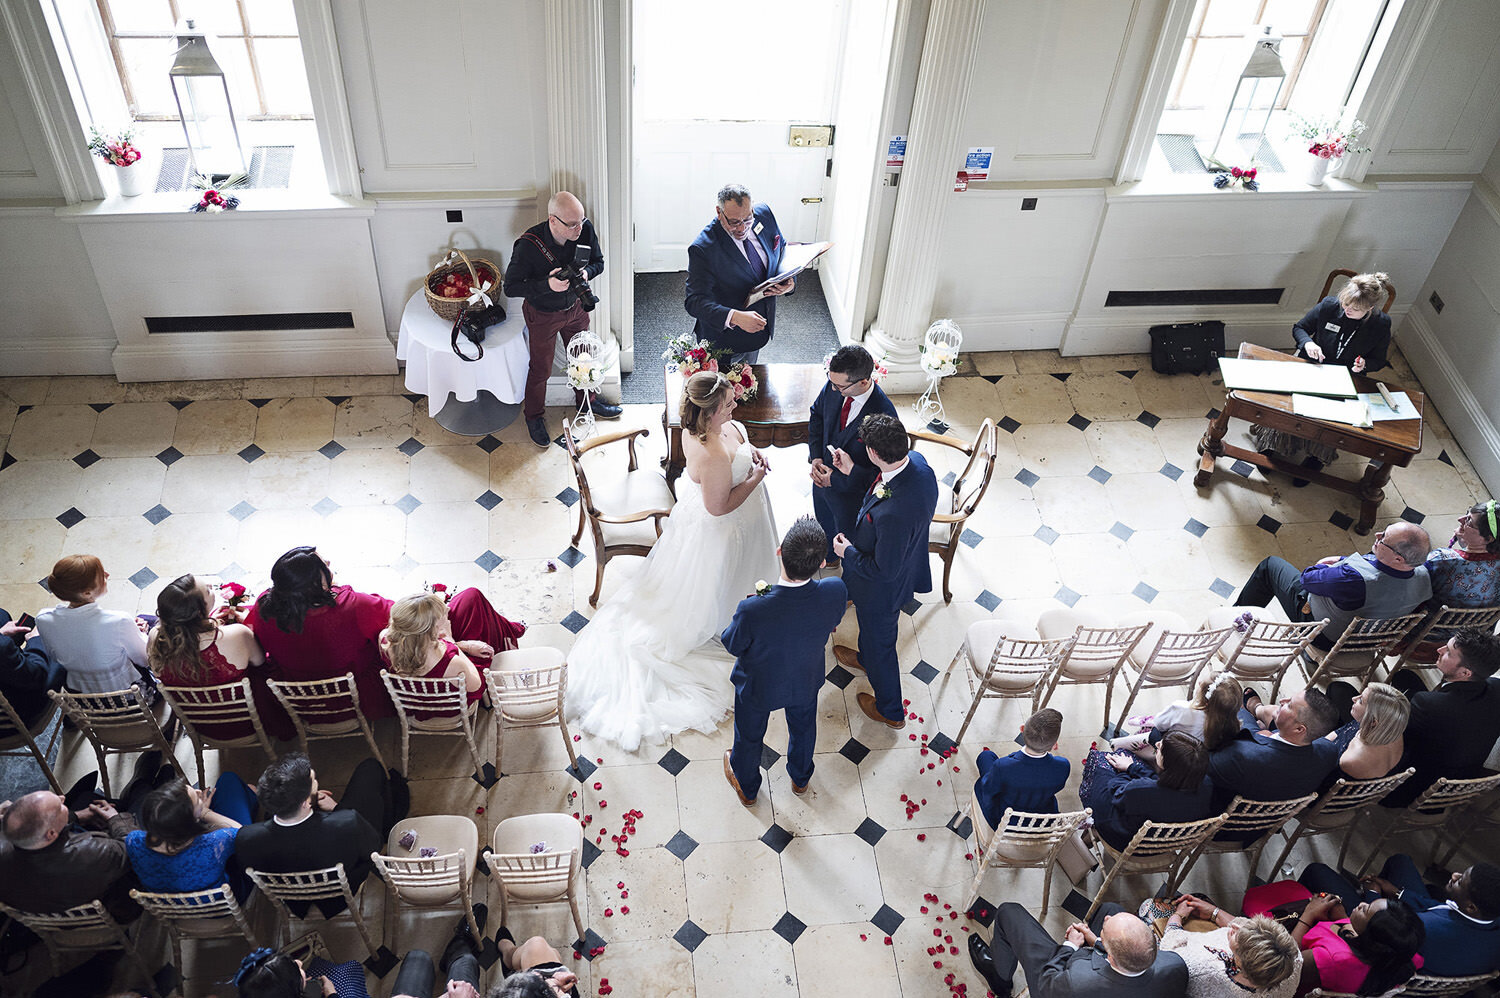 Chicheley Hall wedding photos (46).jpg